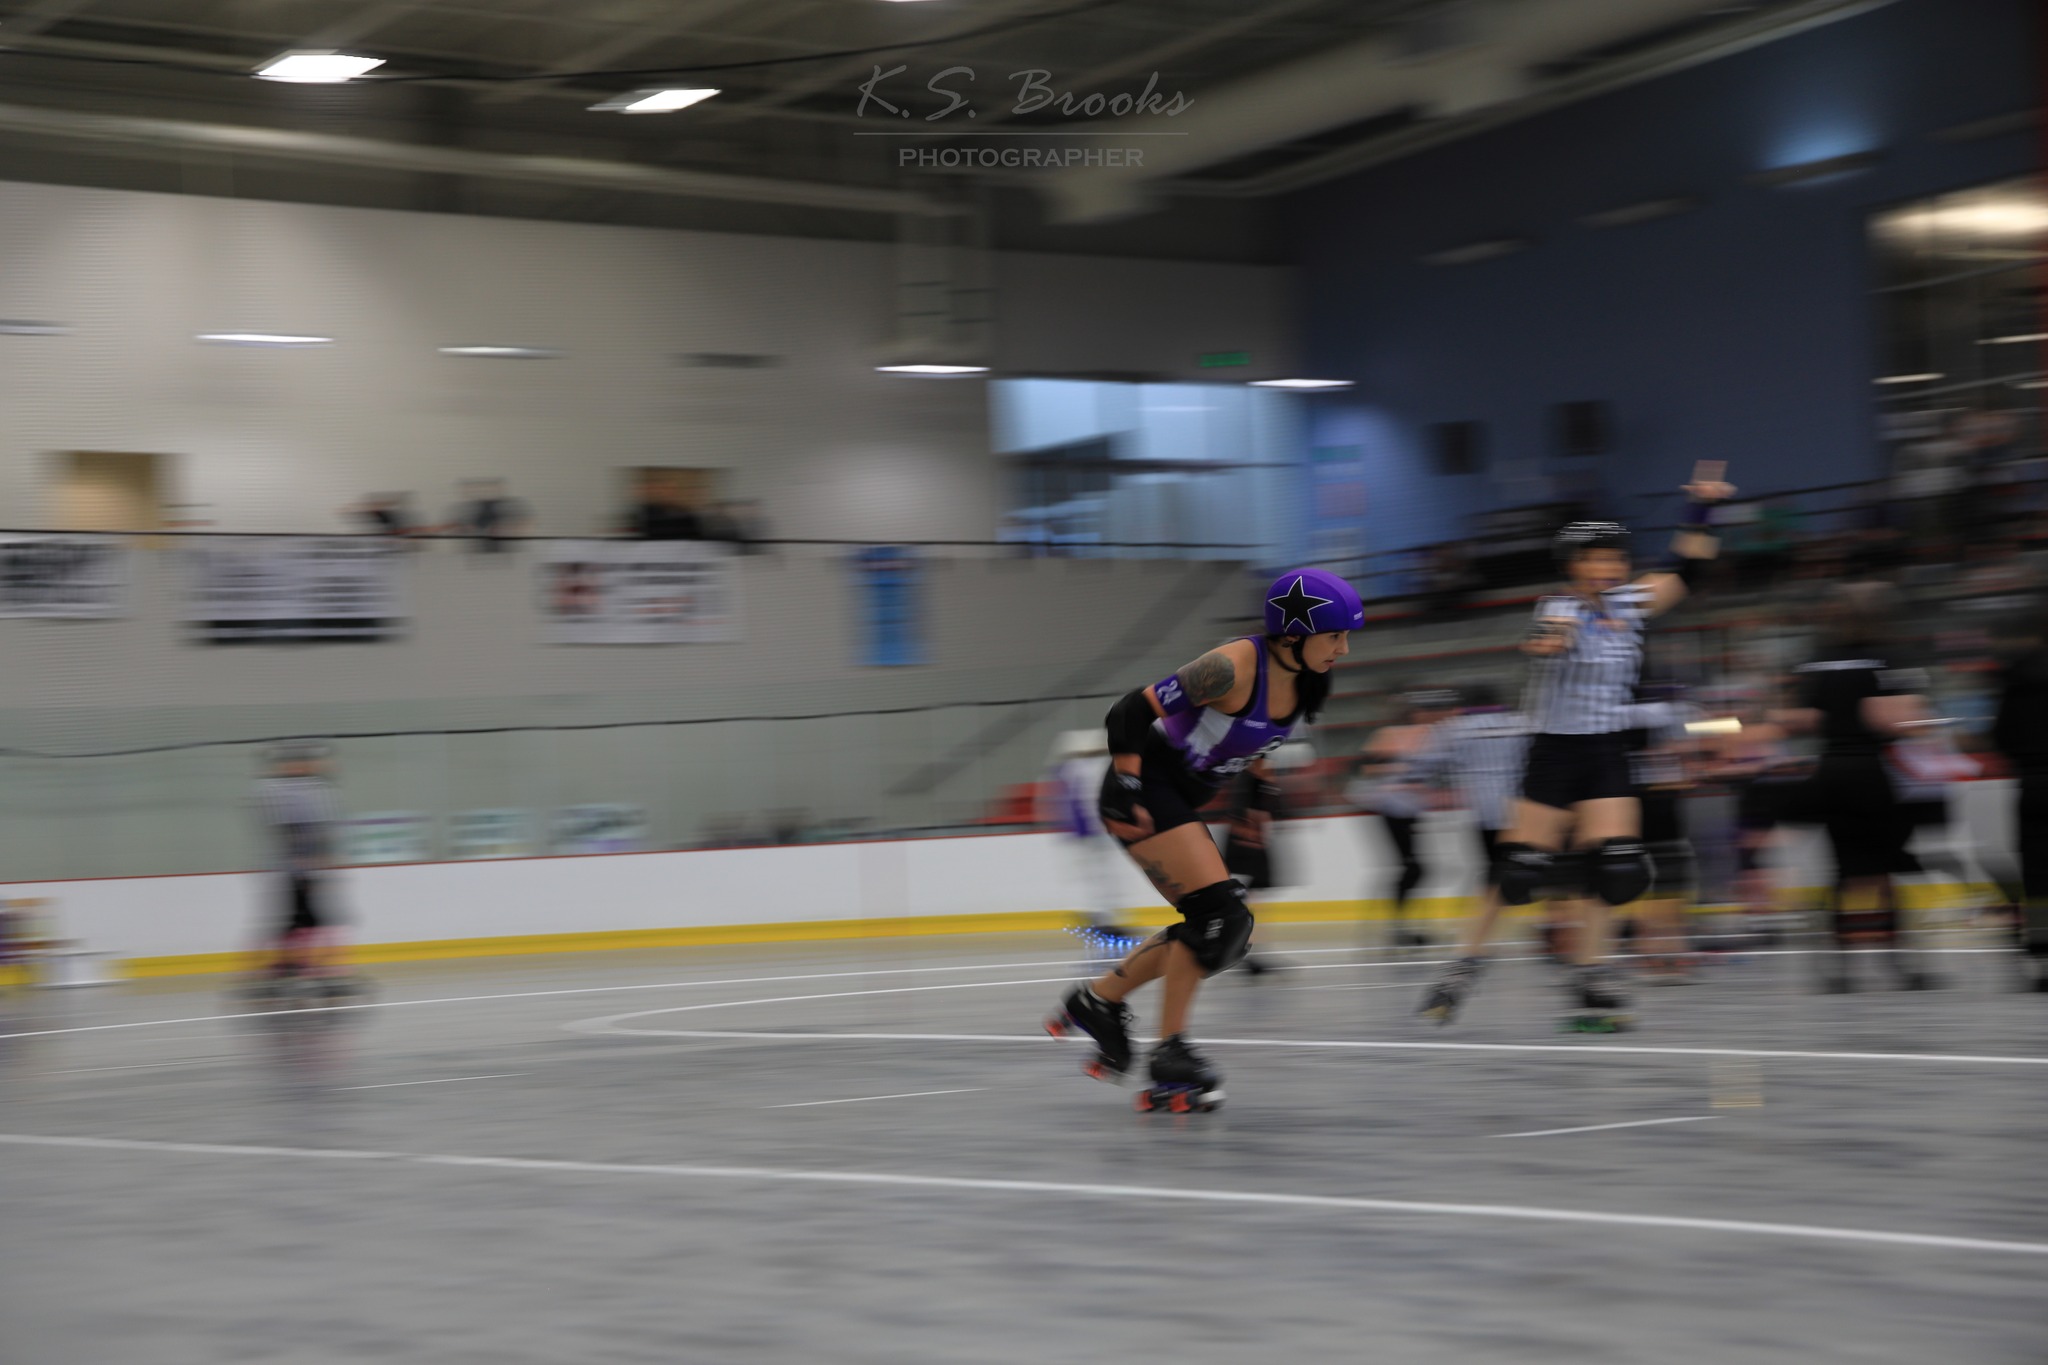 Roller derby skater speeding by photo by K.S. Brooks